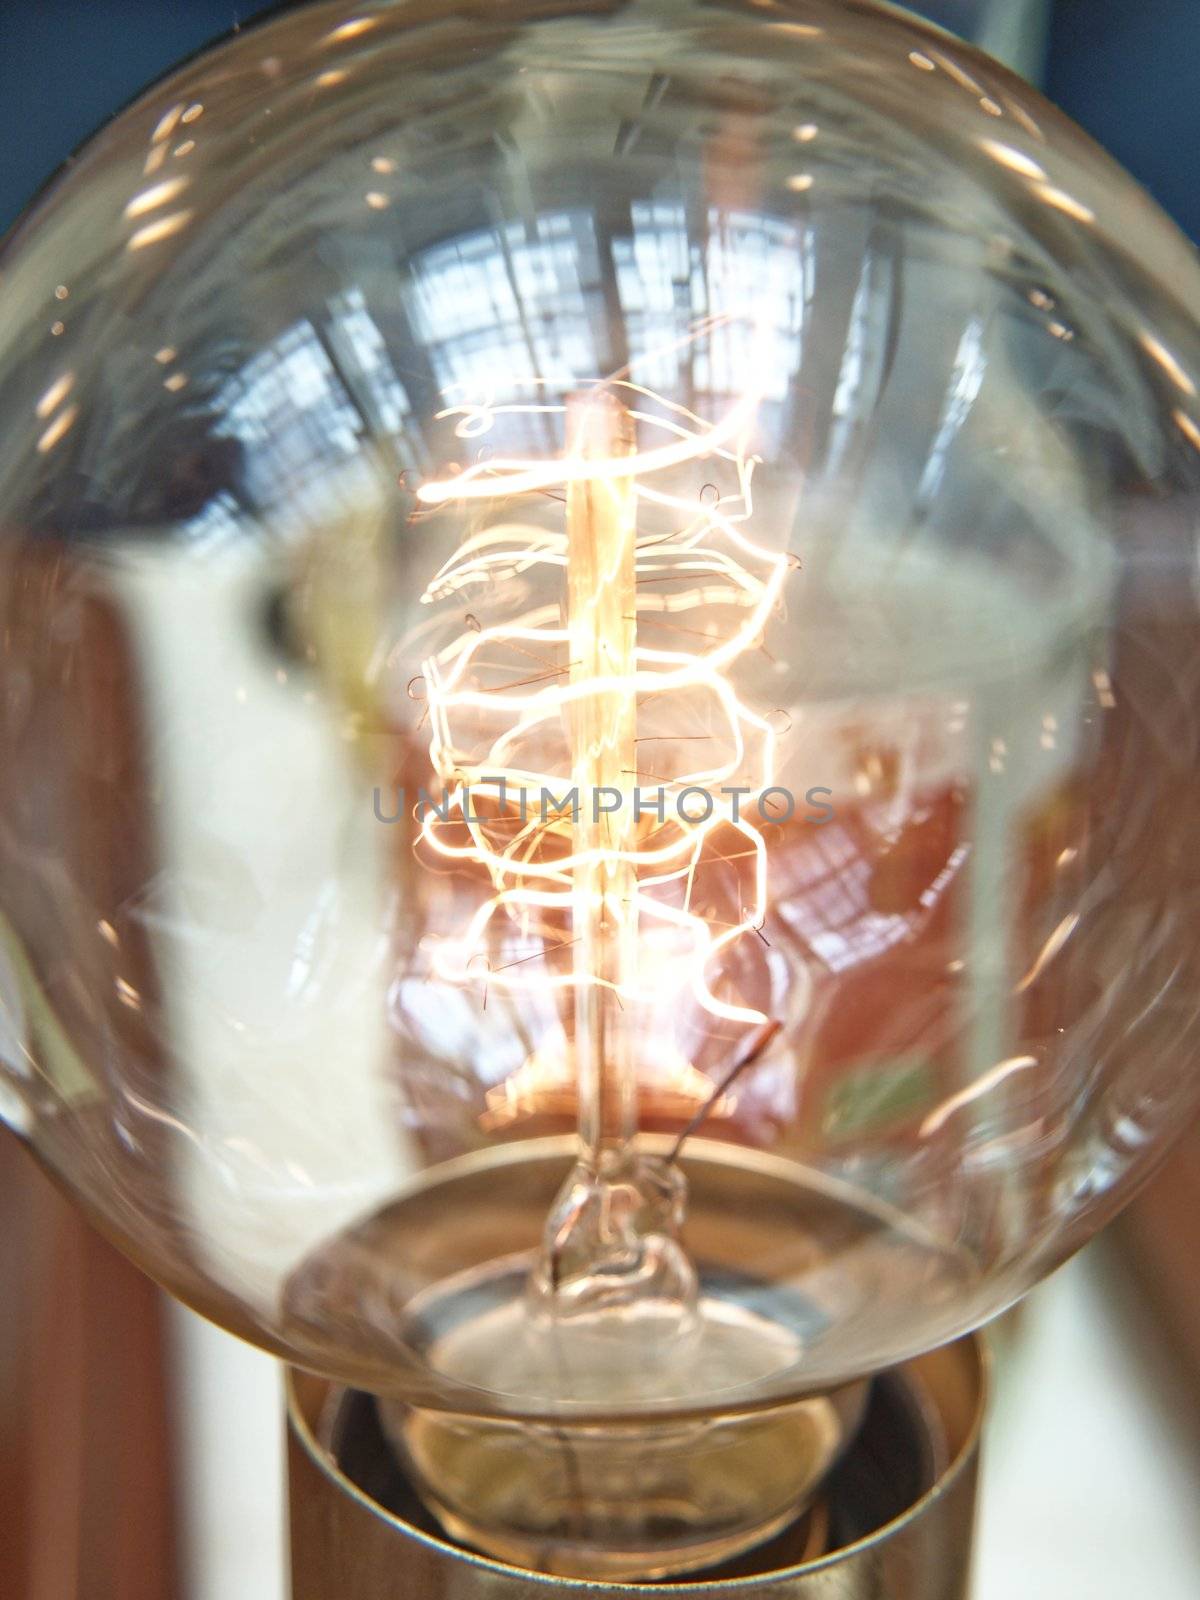 Closeup of a lit light bulb, isolated